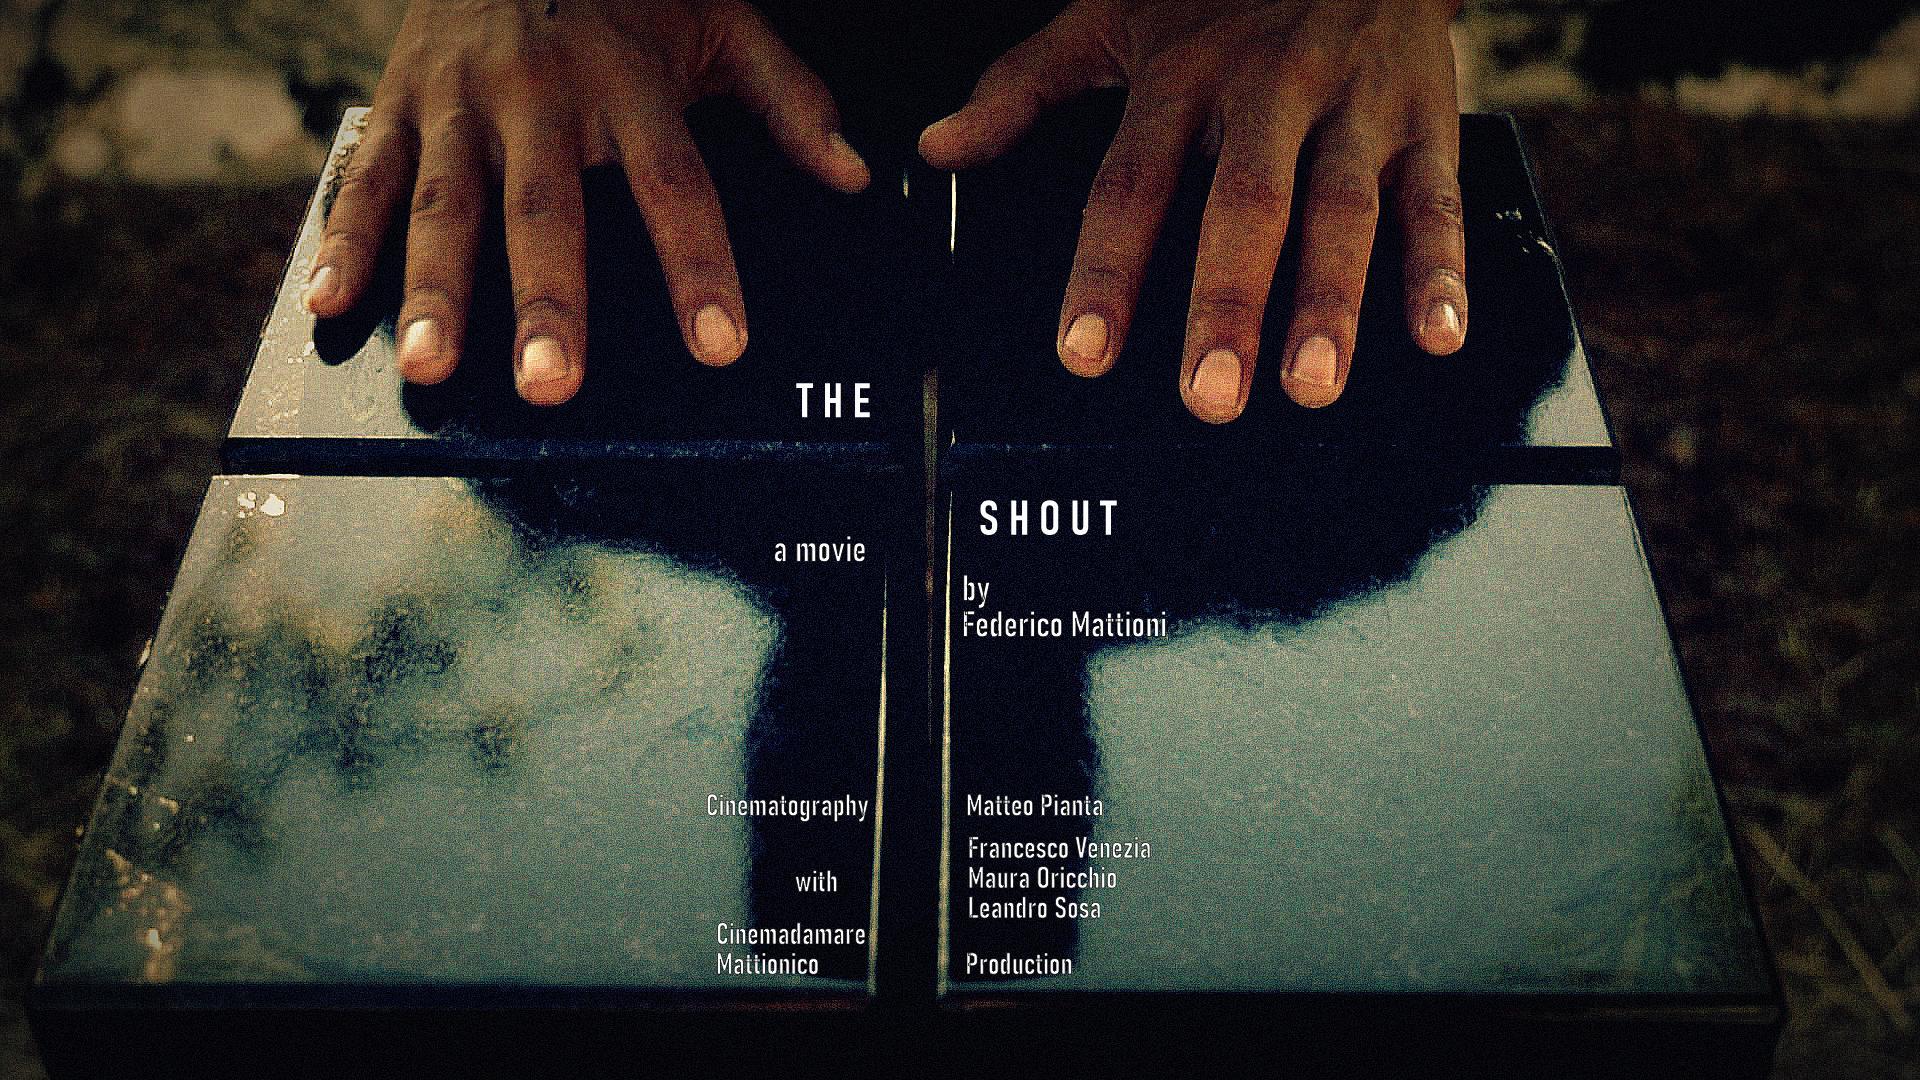 locandina di "The Shout"